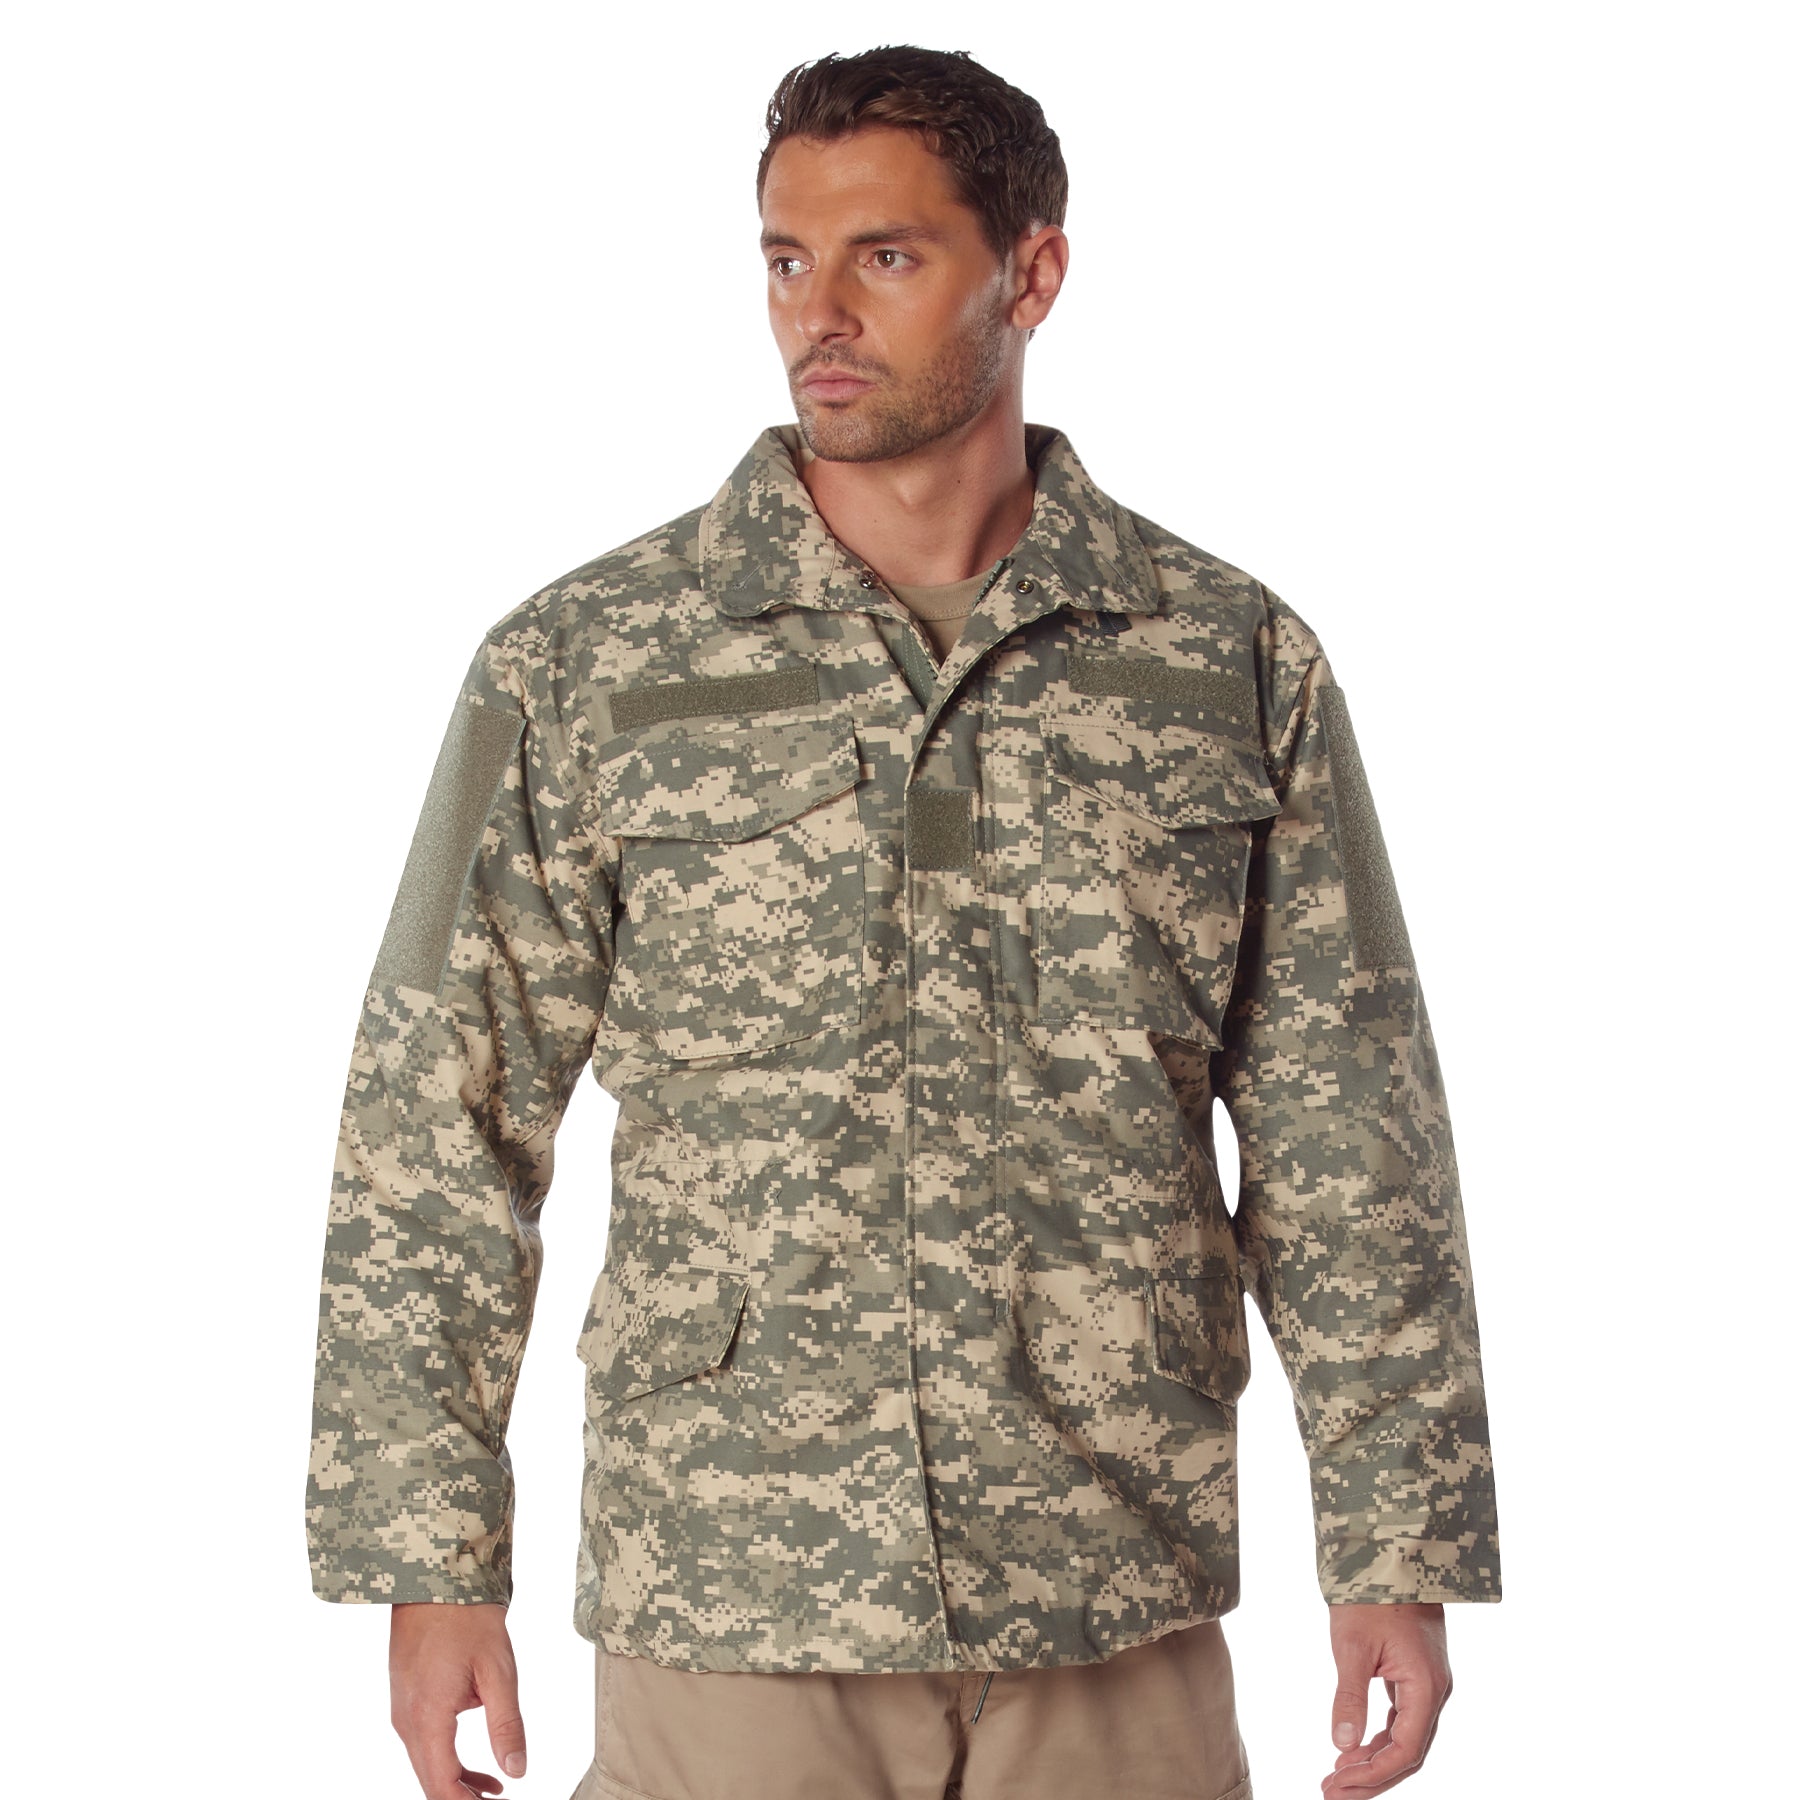 Digital Camo Poly/Cotton M-65 Field Jackets